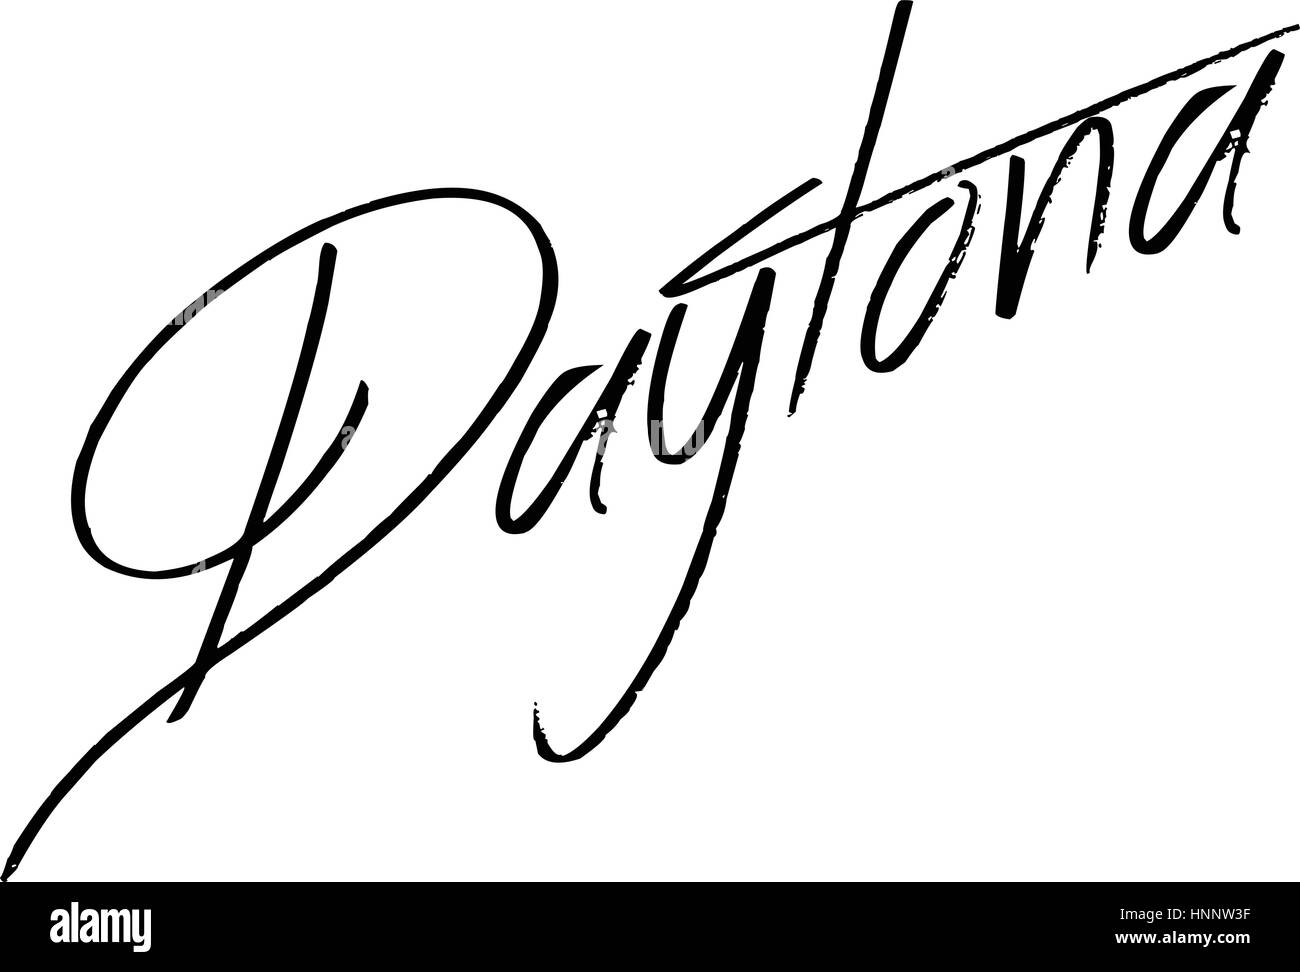 Daytona text sign illustration on white Background Stock Vector